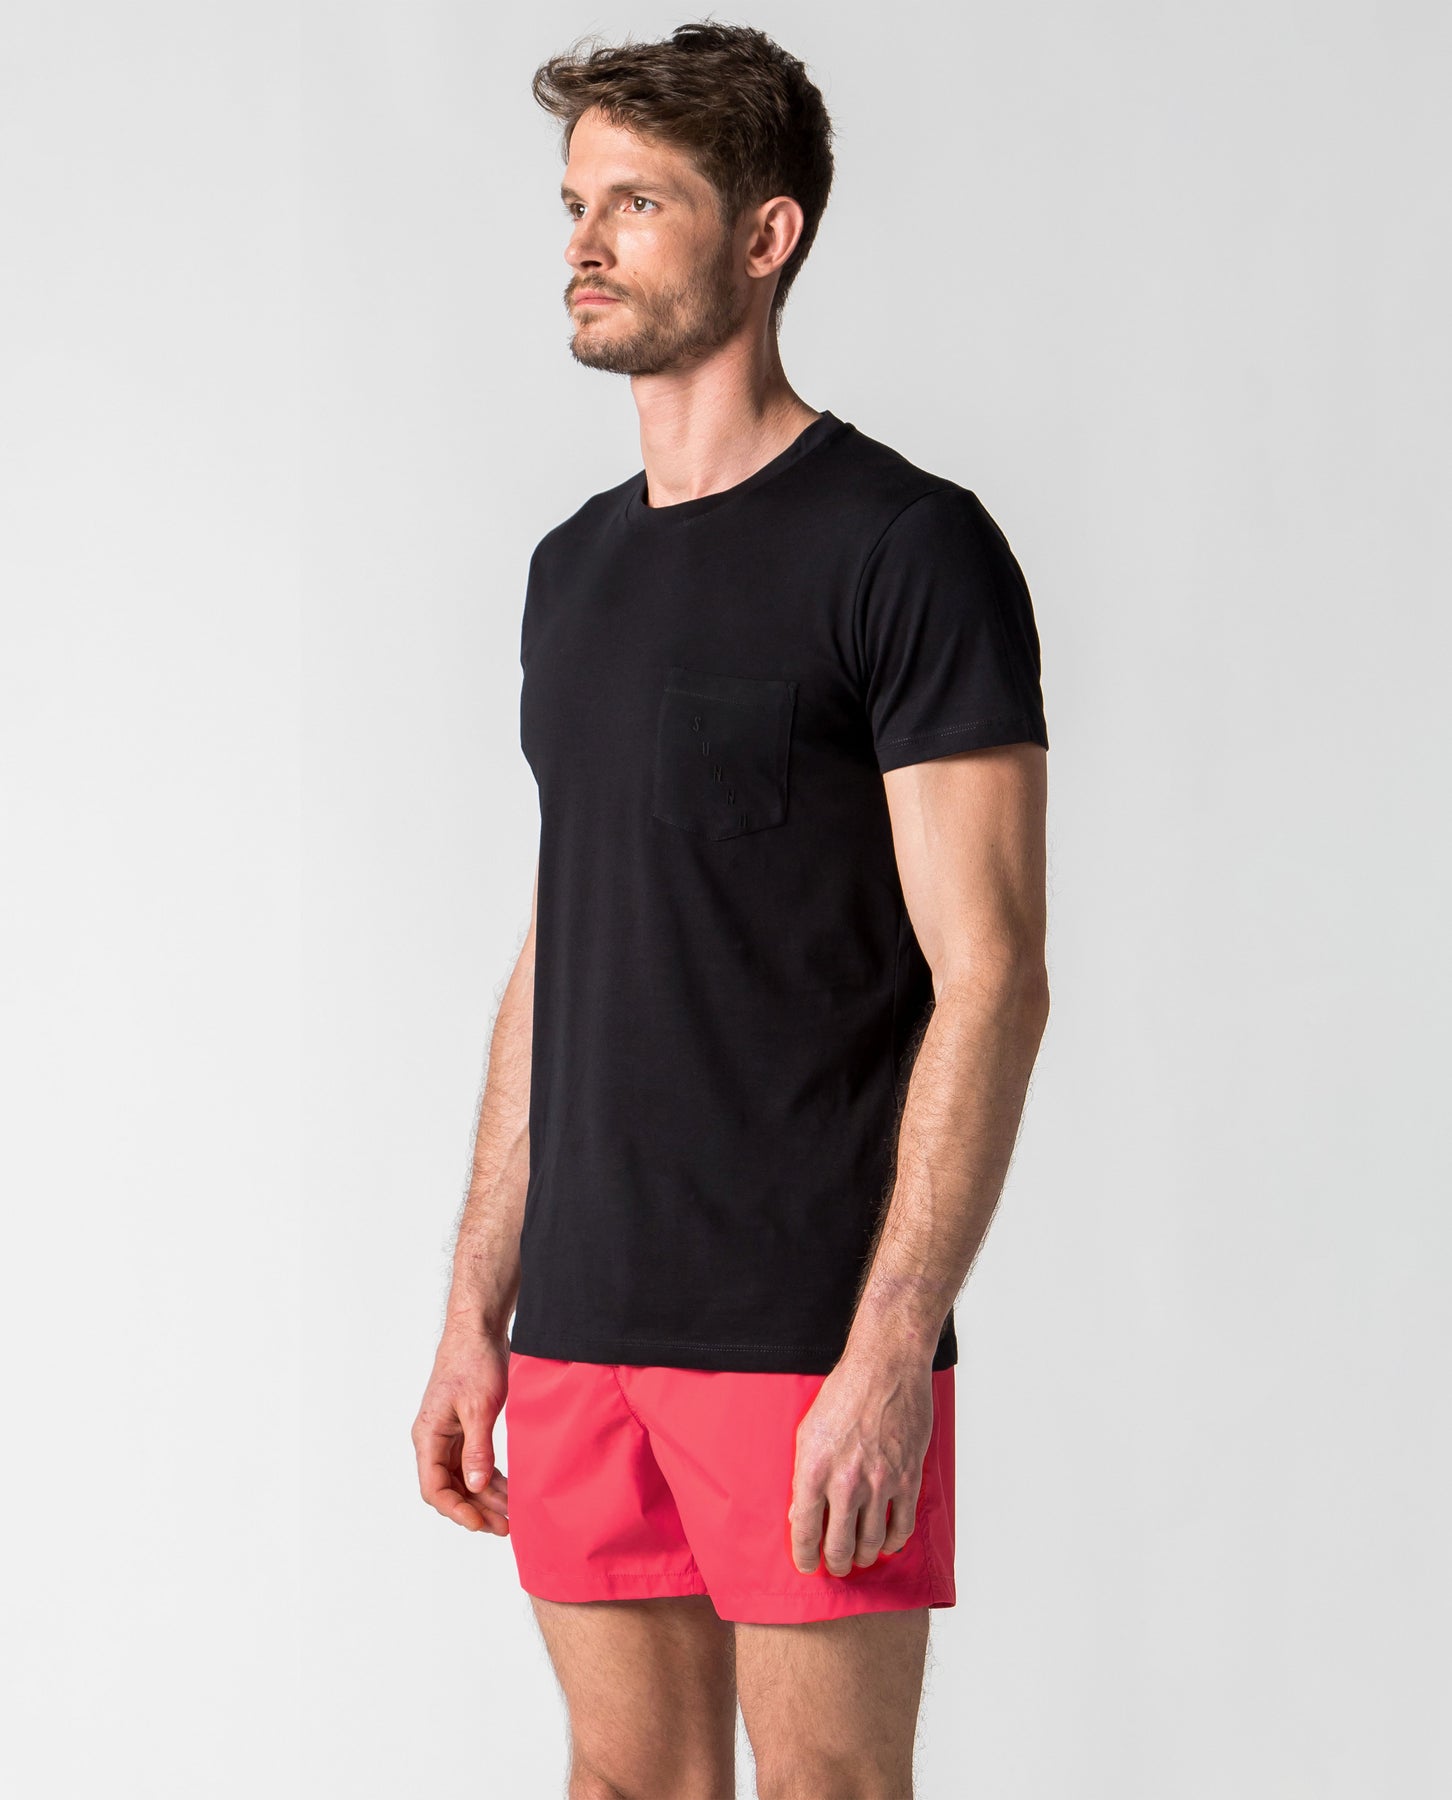 Original Men's T-shirts and Resort Wear – SUNNO – SUNNO BY BENE CAPE